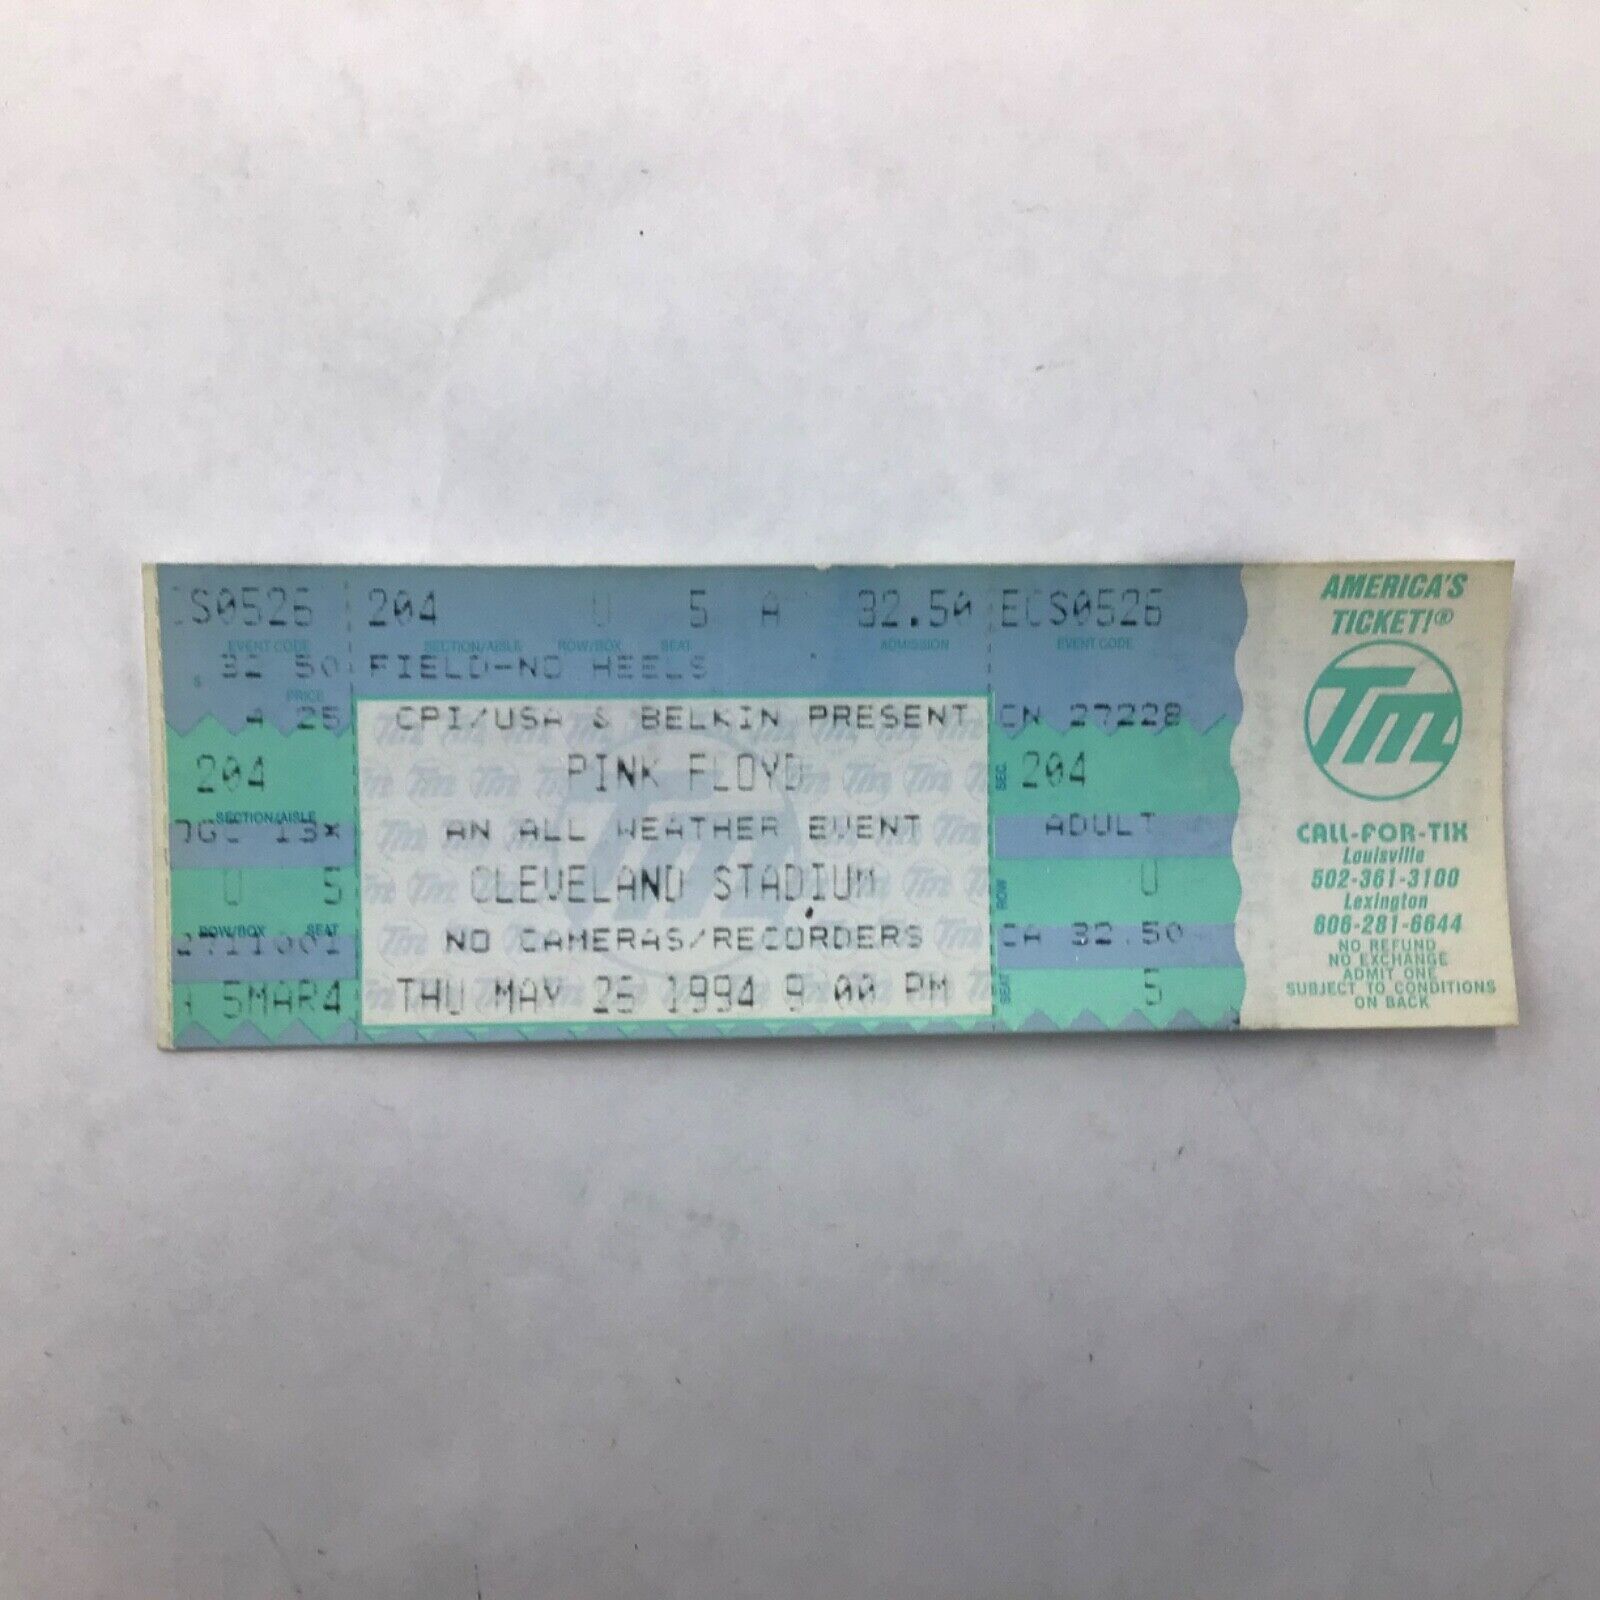 Pink Floyd Unused Concert Ticket Stub Cleveland Stadium, May 26, 1994 Show